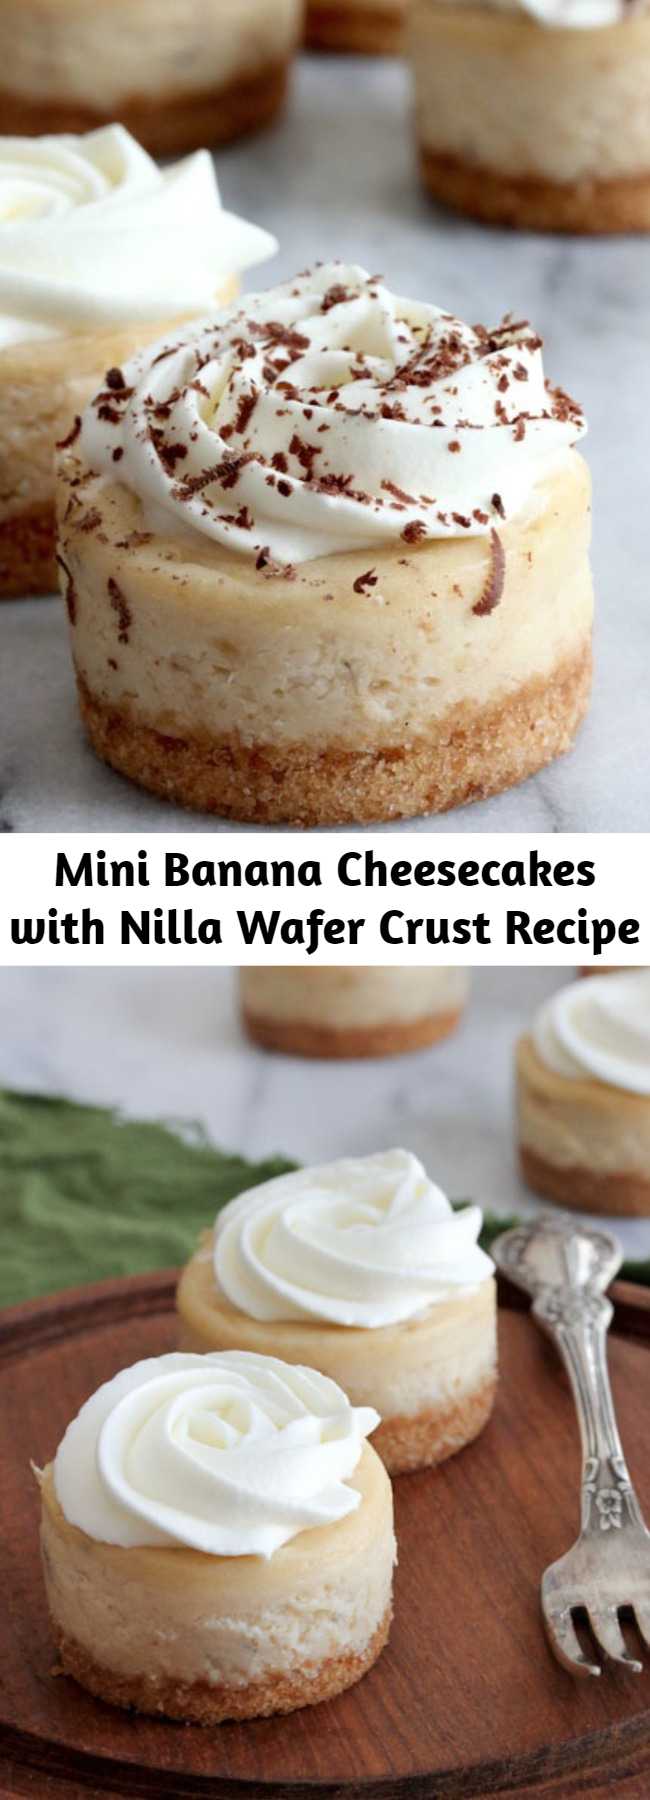 Mini Banana Cheesecakes with Nilla Wafer Crust Recipe - The perfect two bite banana cheesecake with Nilla Wafer crust, fresh whipped cream and a dusting of freshly grated dark chocolate.